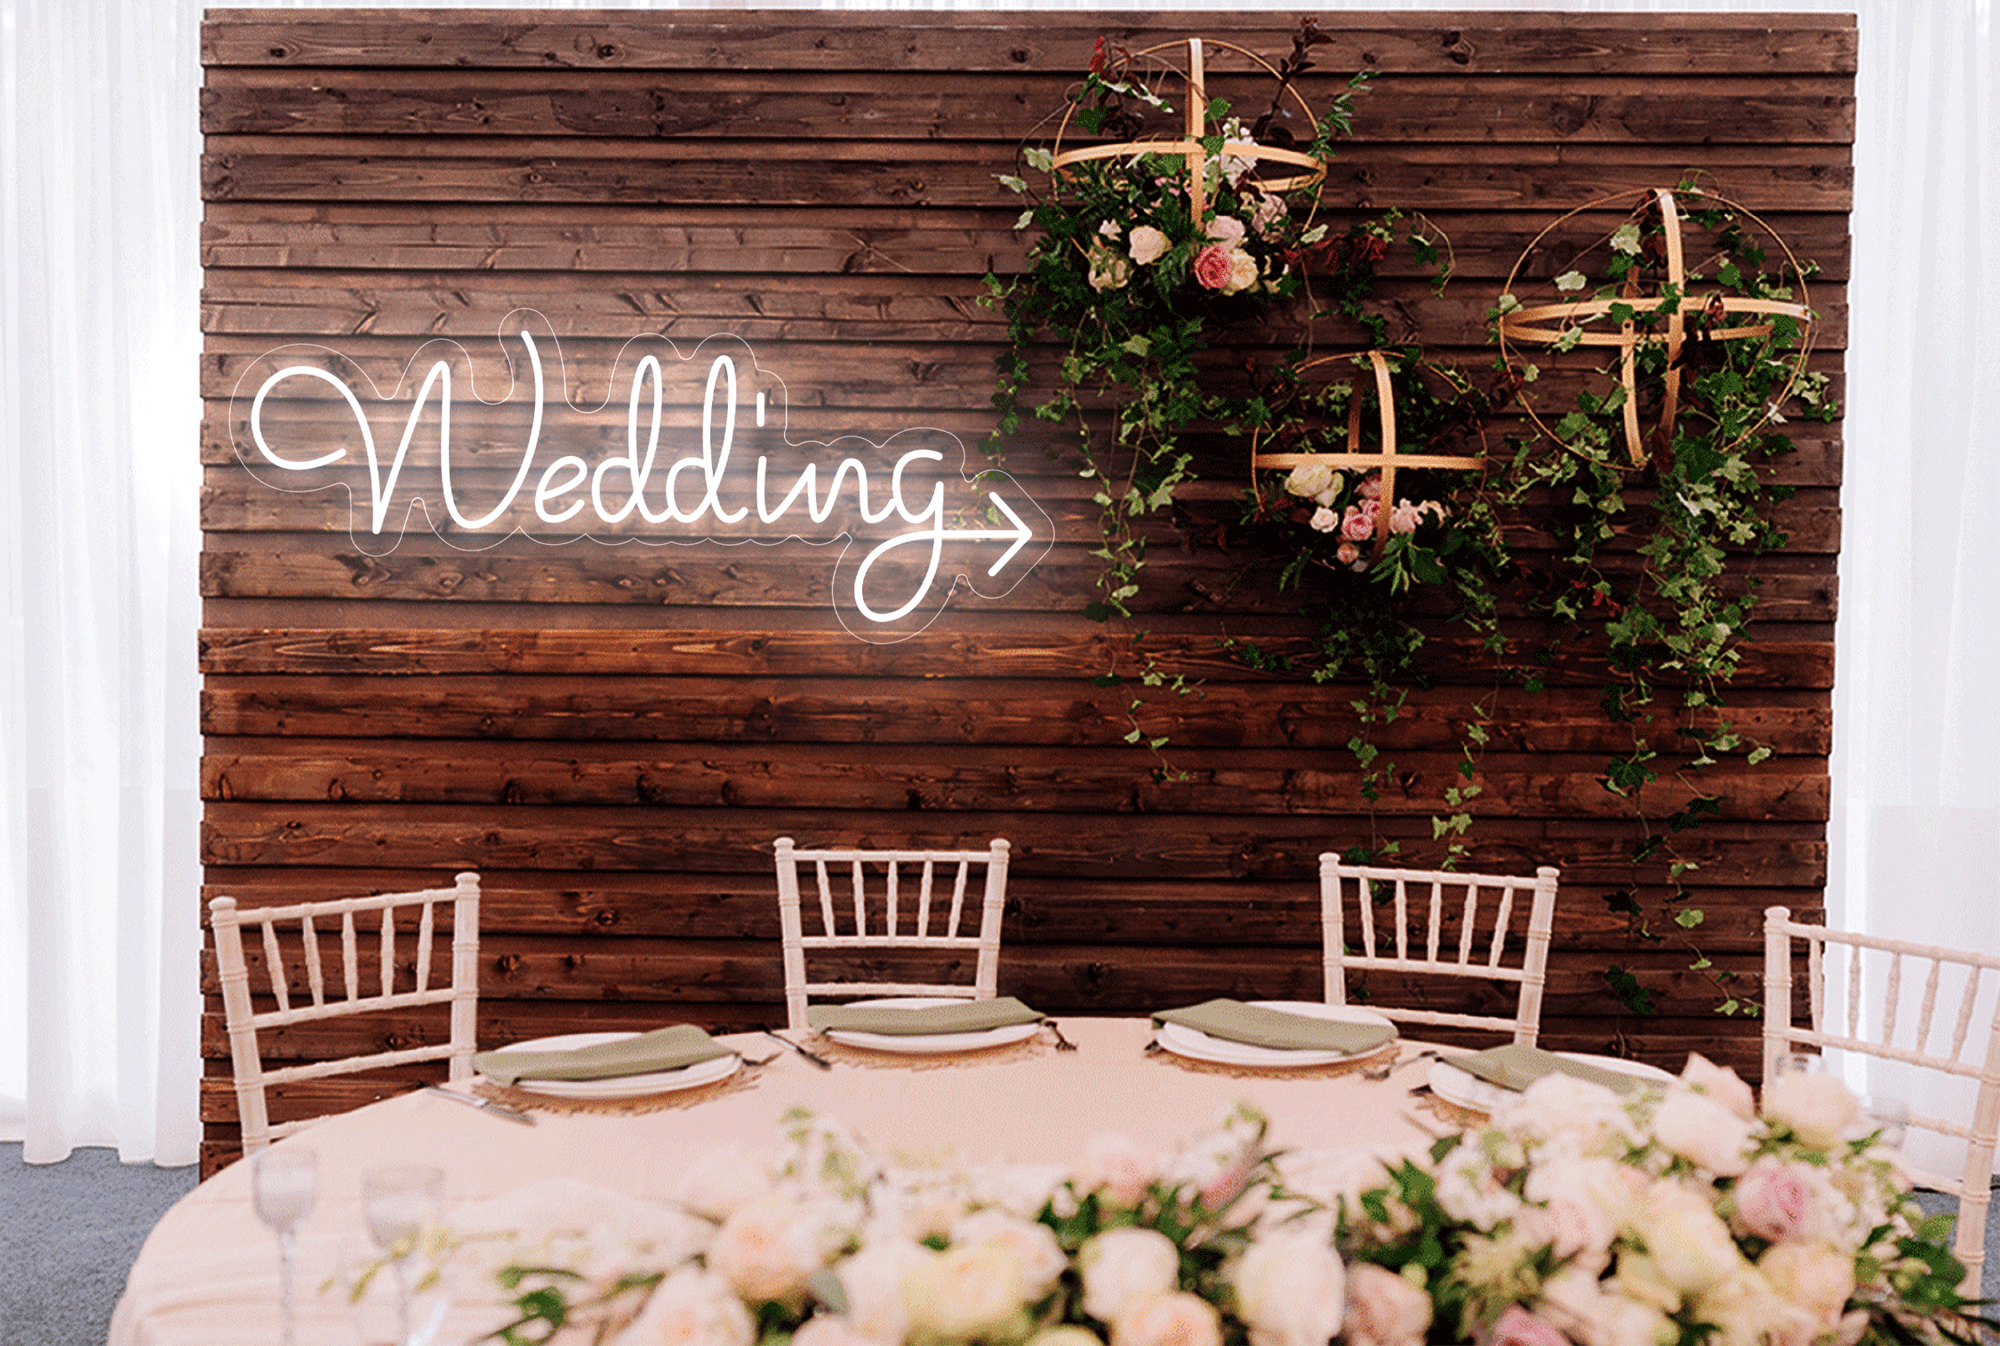 "Wedding" LED Neon Sign